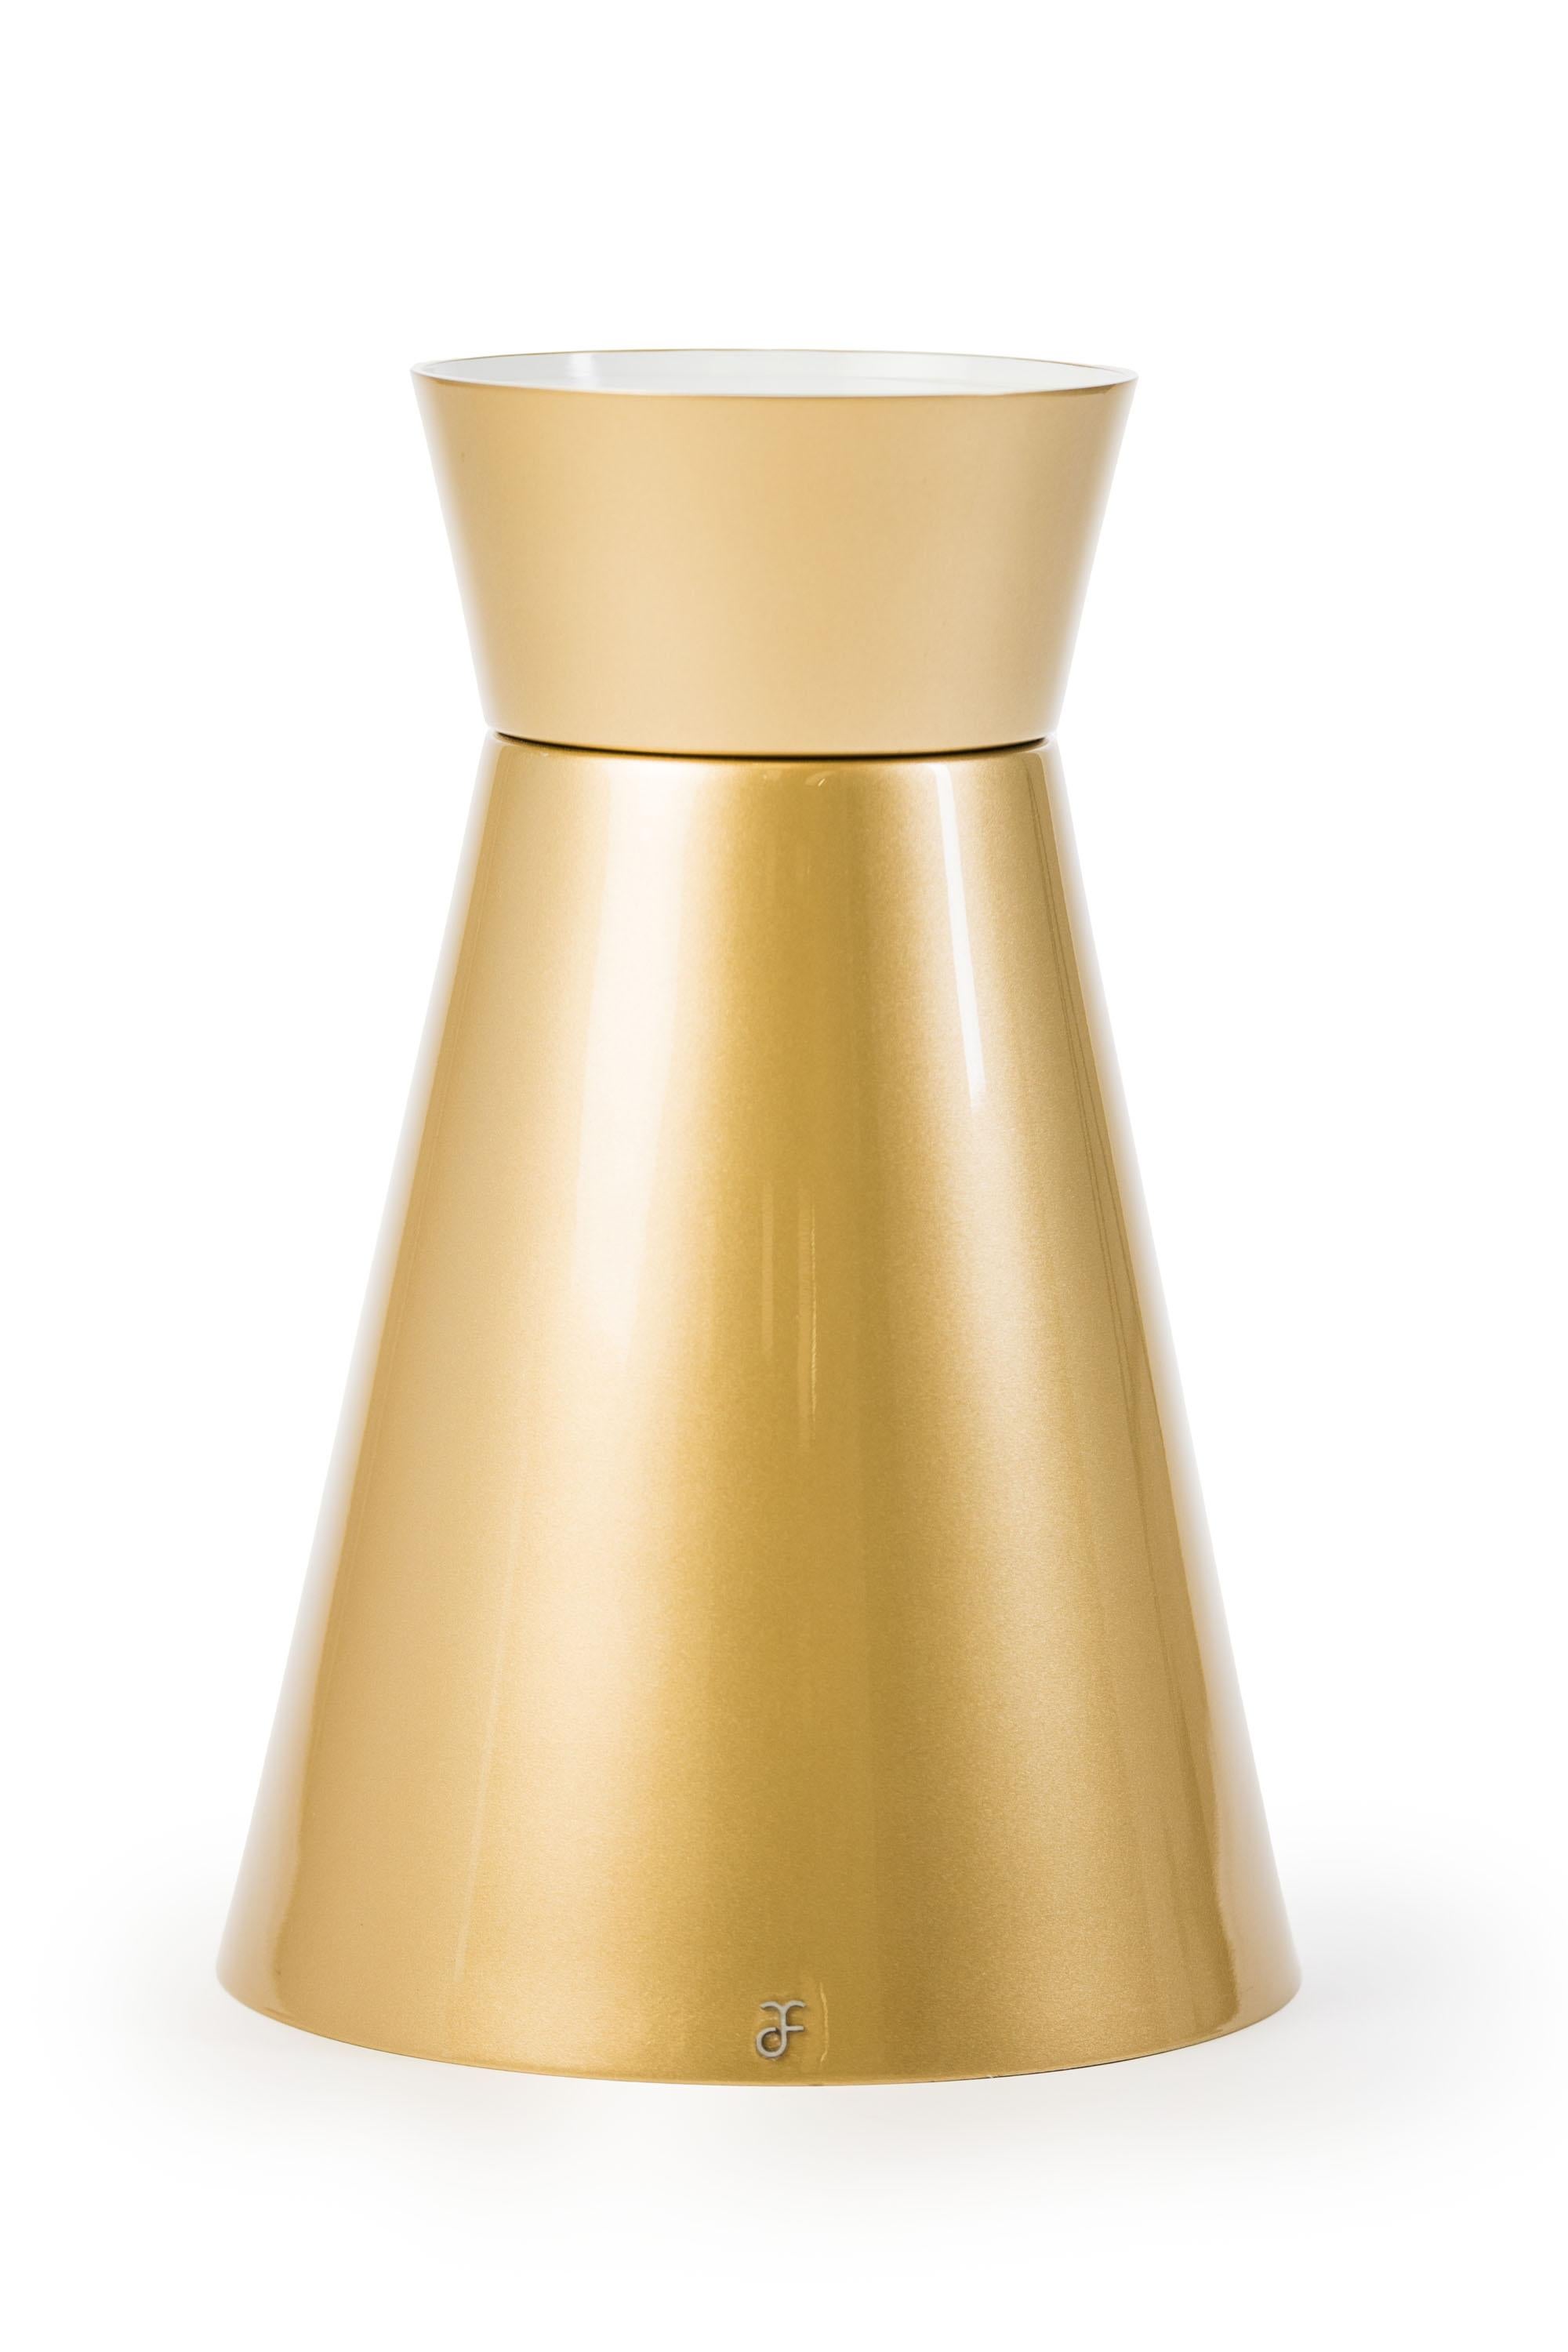 Italian Contemporary Ulus Lamp in Aluminium by Altreforme For Sale